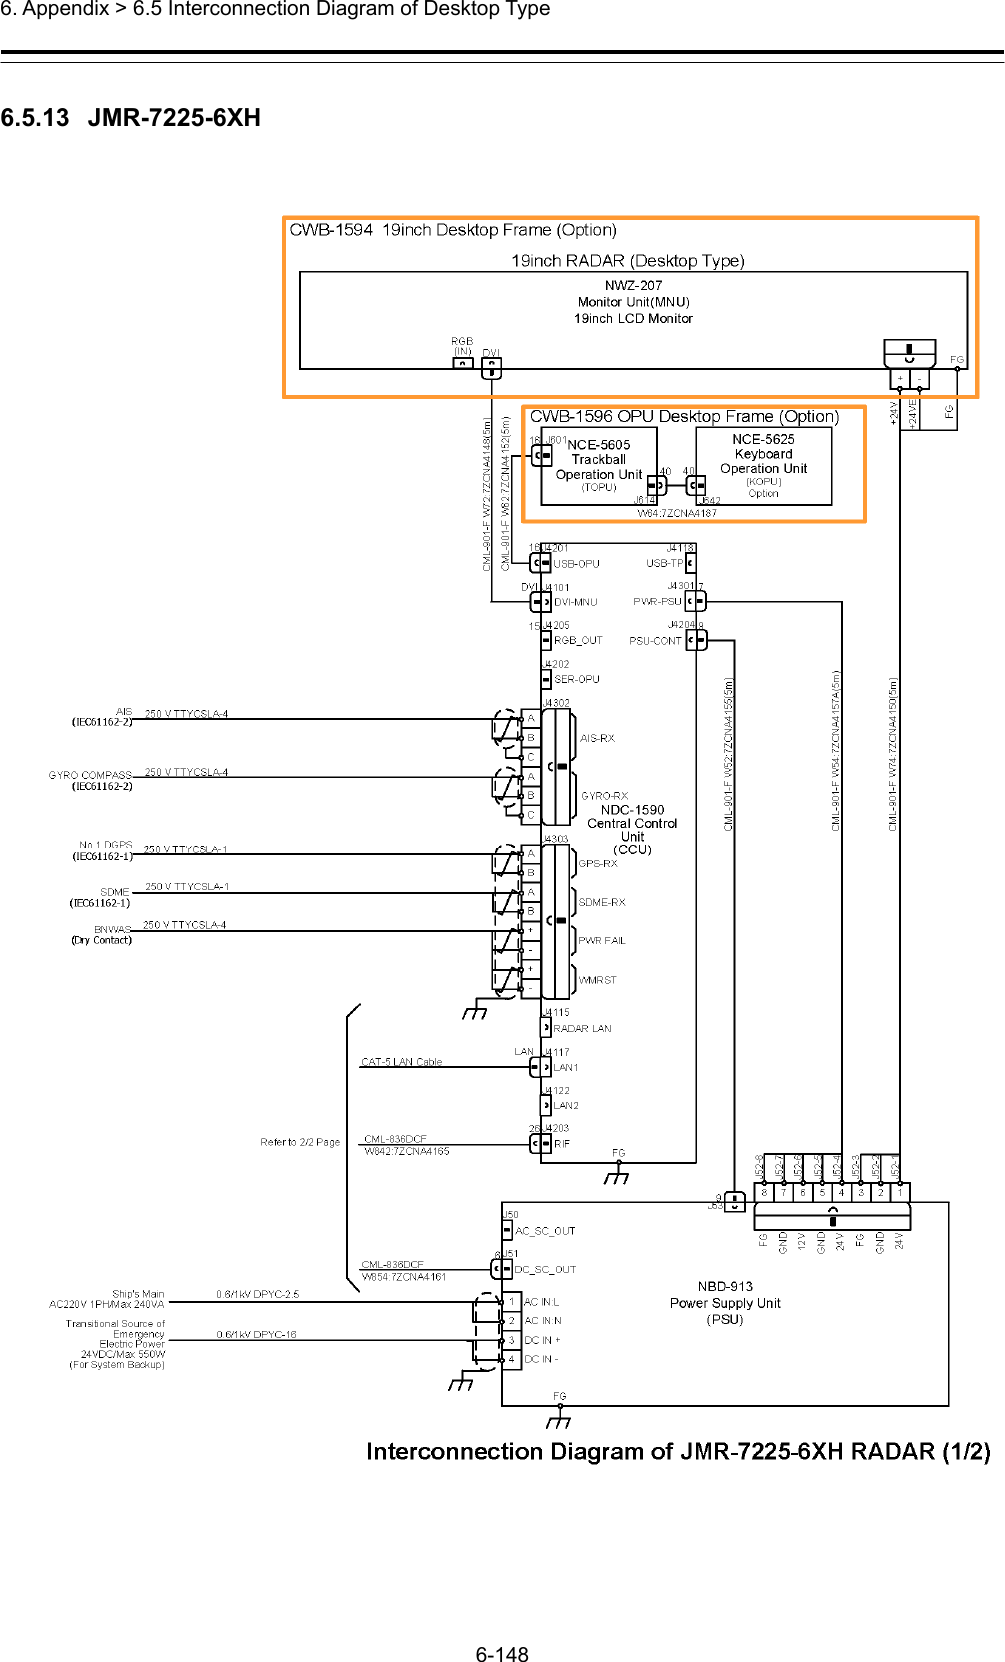  6. Appendix &gt; 6.5 Interconnection Diagram of Desktop Type 6-148  6.5.13  JMR-7225-6XH  